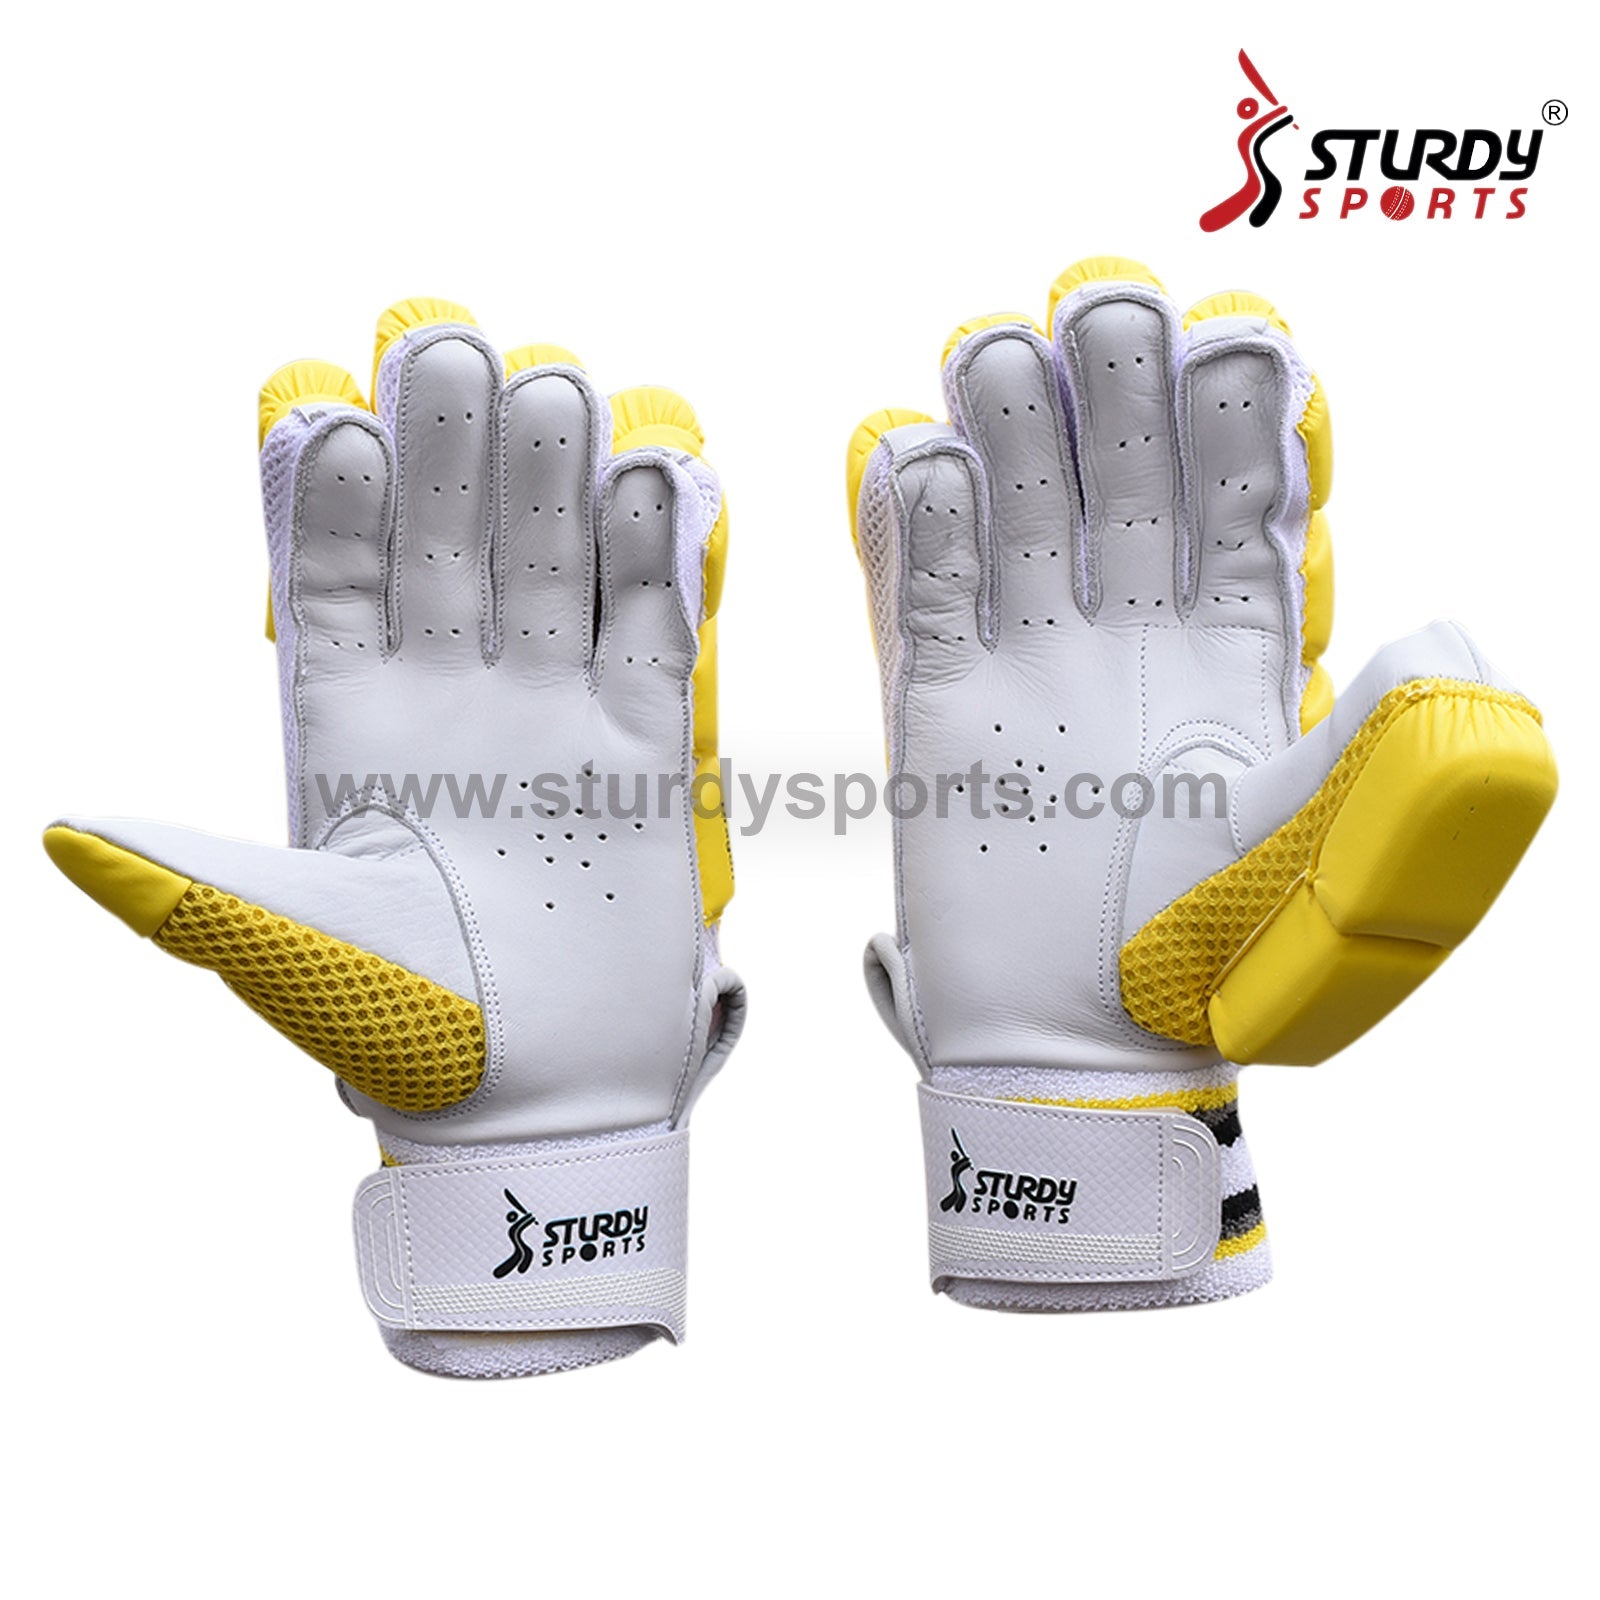 Sturdy Dragon Yellow Cricket Batting Gloves - Senior